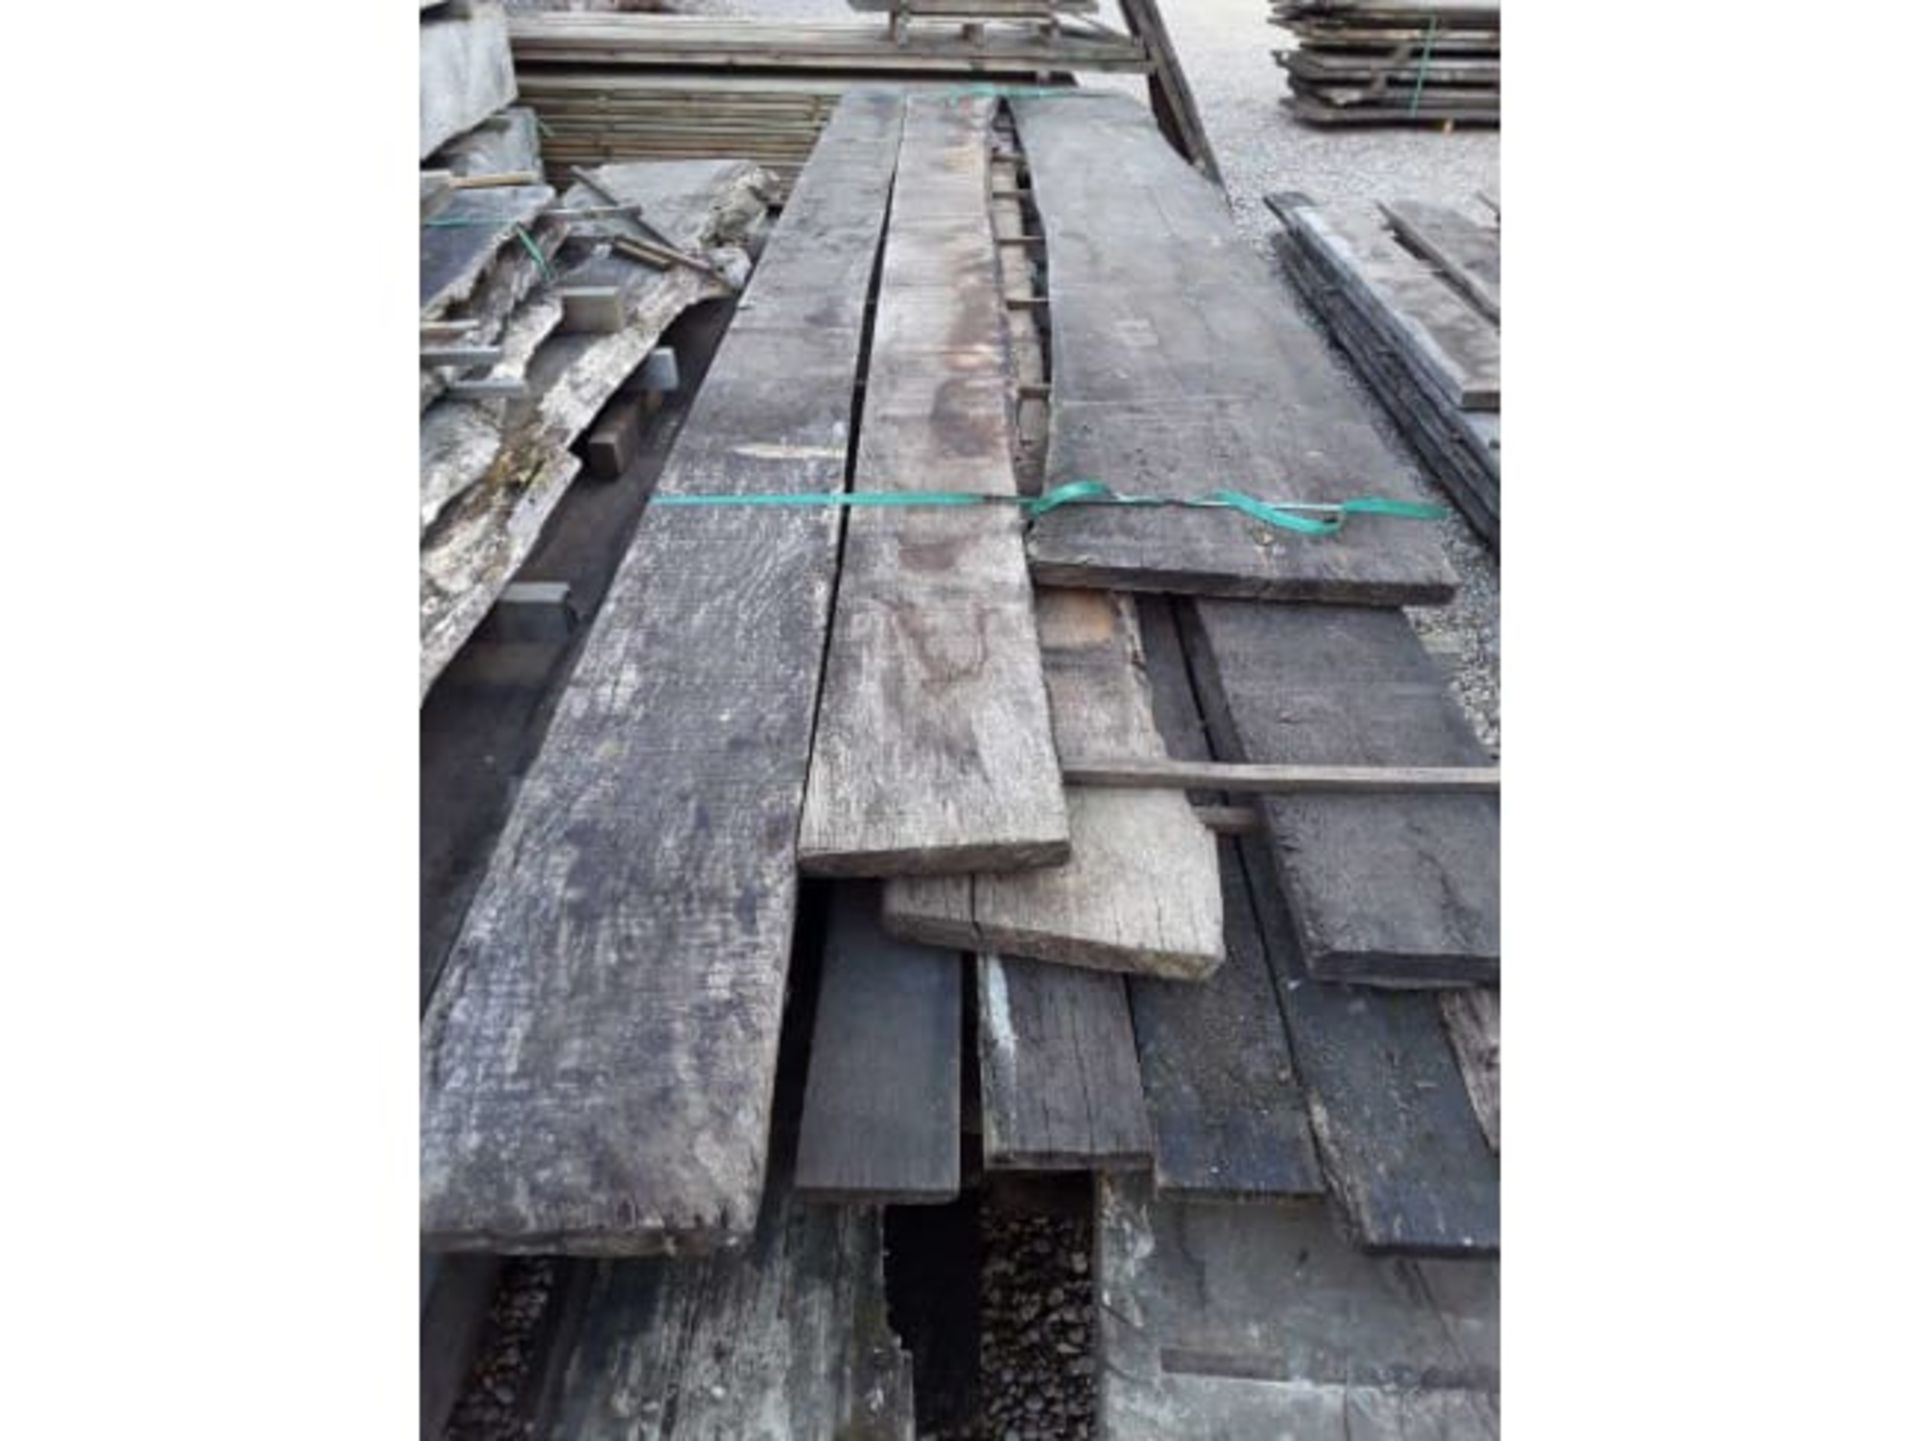 13 x Hardwood Timber Sawn Air Dried English Oak Waney Edge / Live Edge Boards / Slabs / Planks - Image 5 of 7